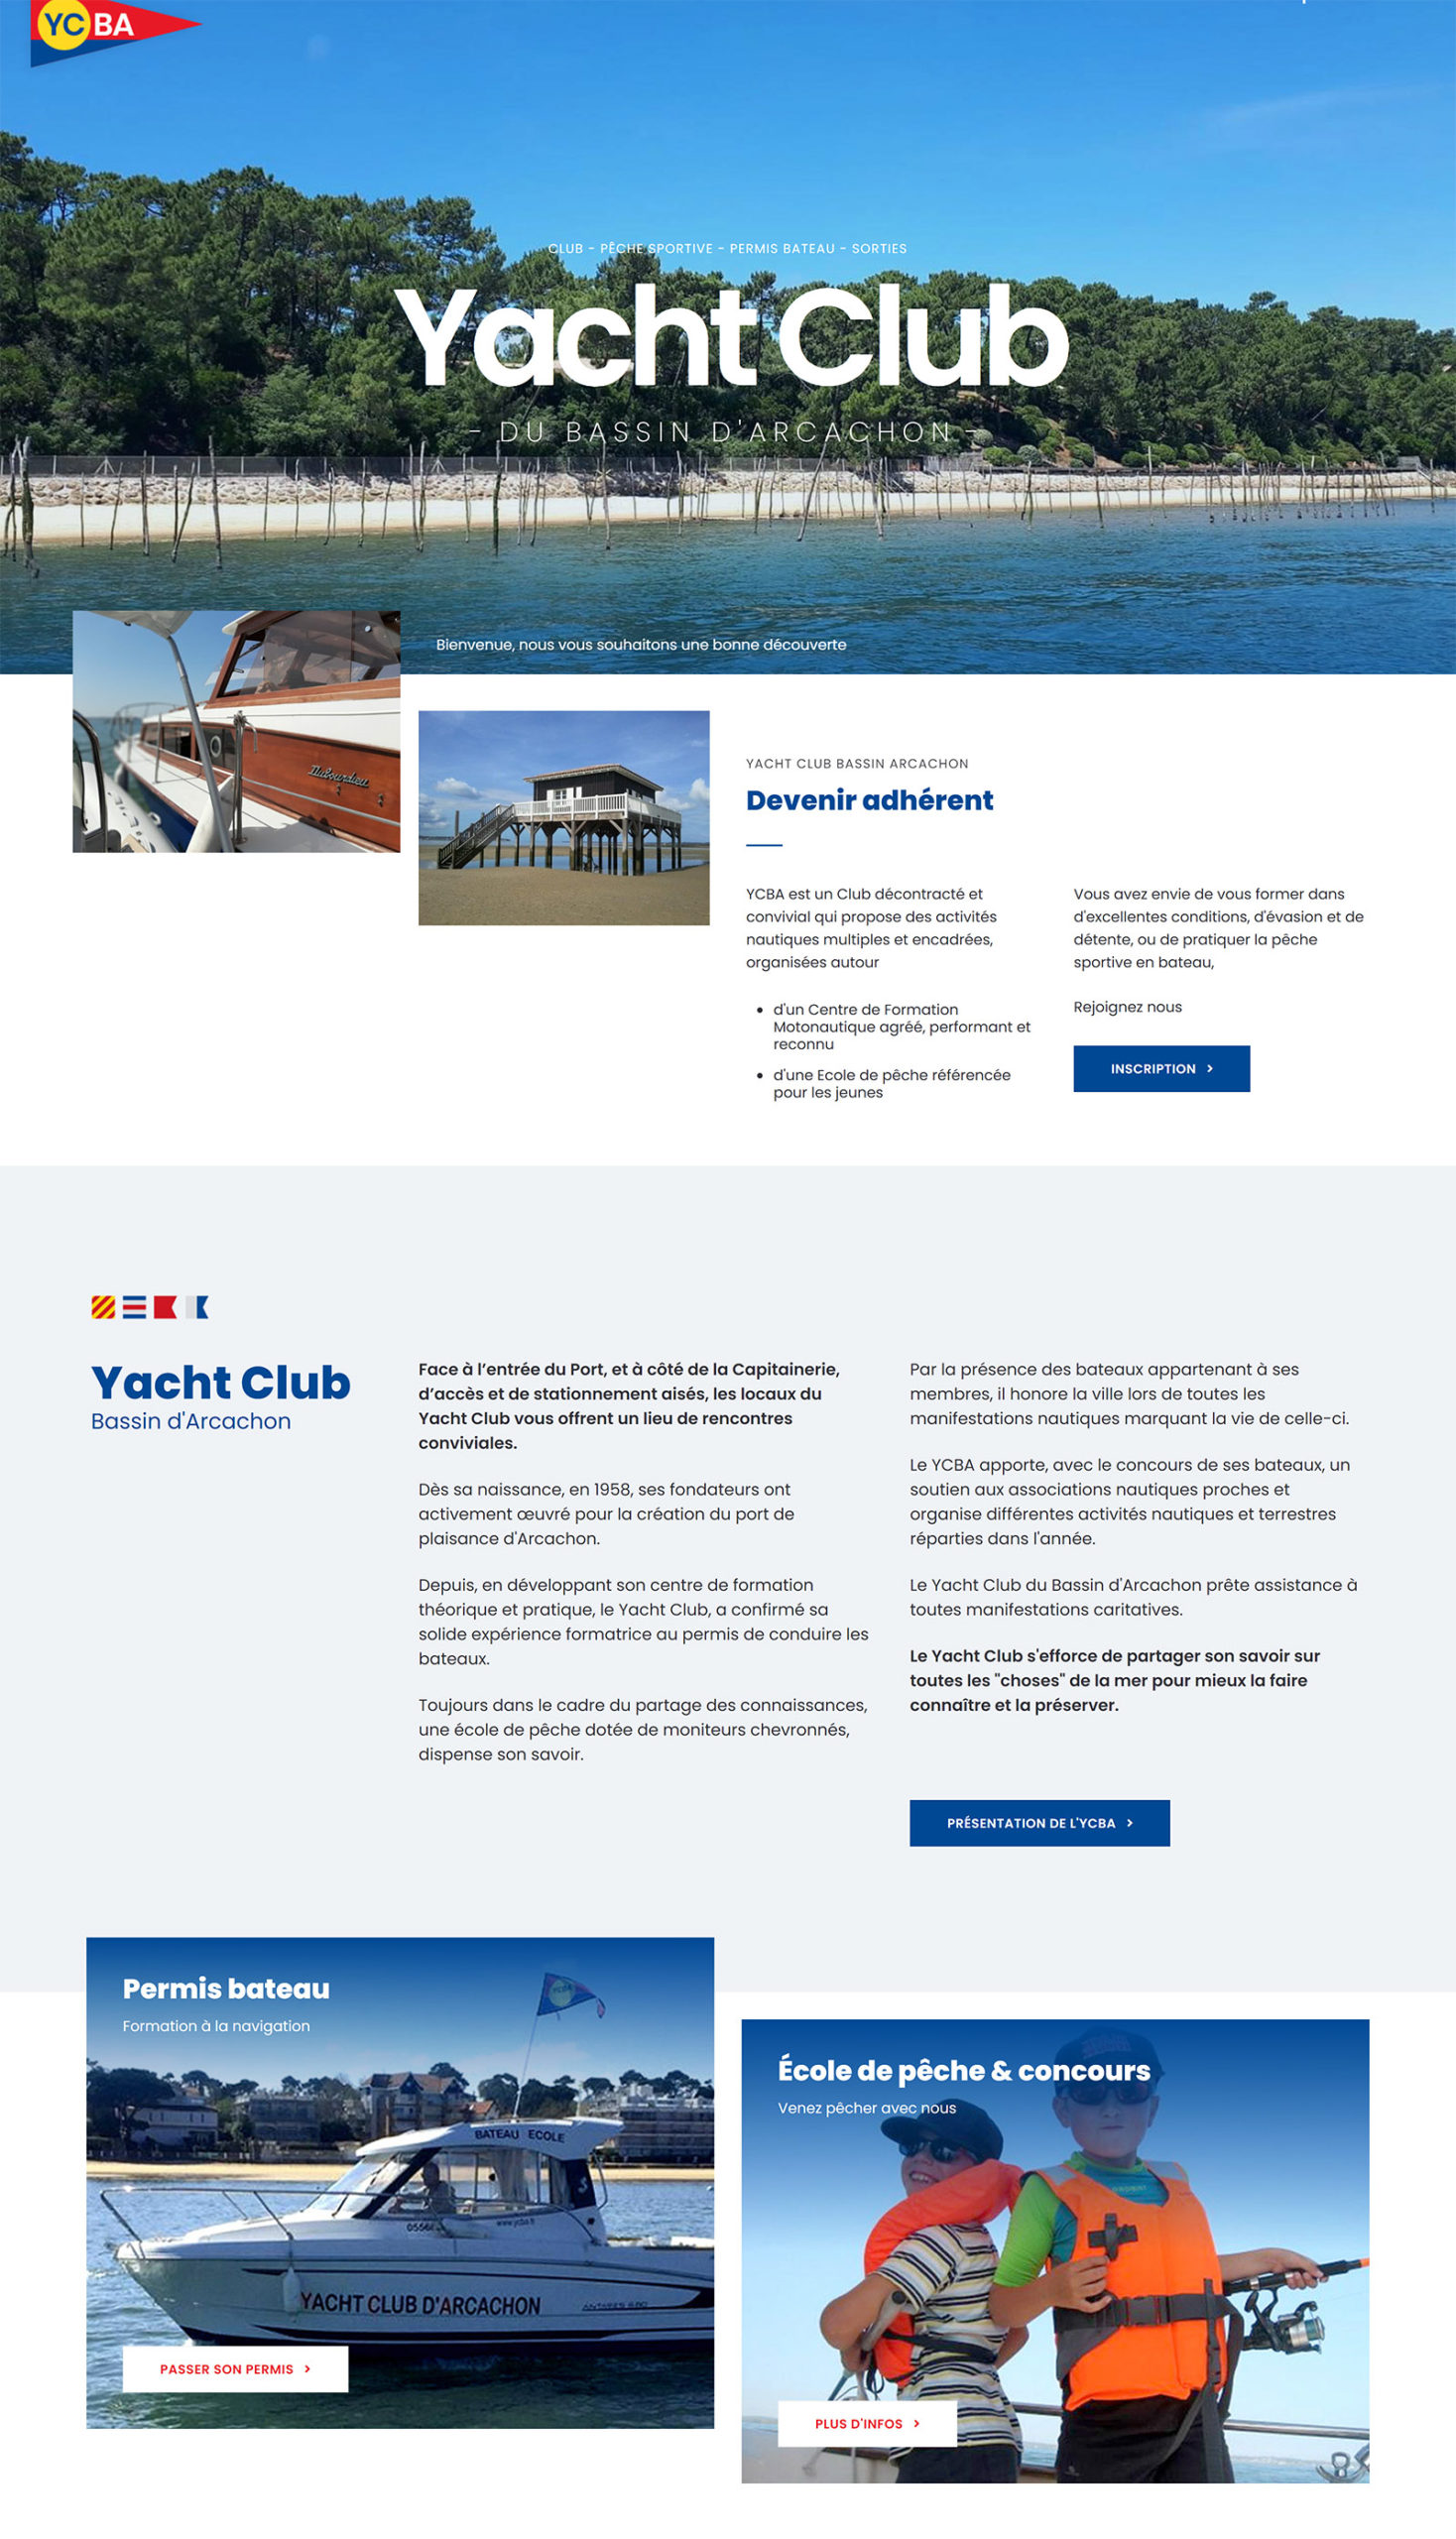 Yacht Club du Bassin d’Arcachon